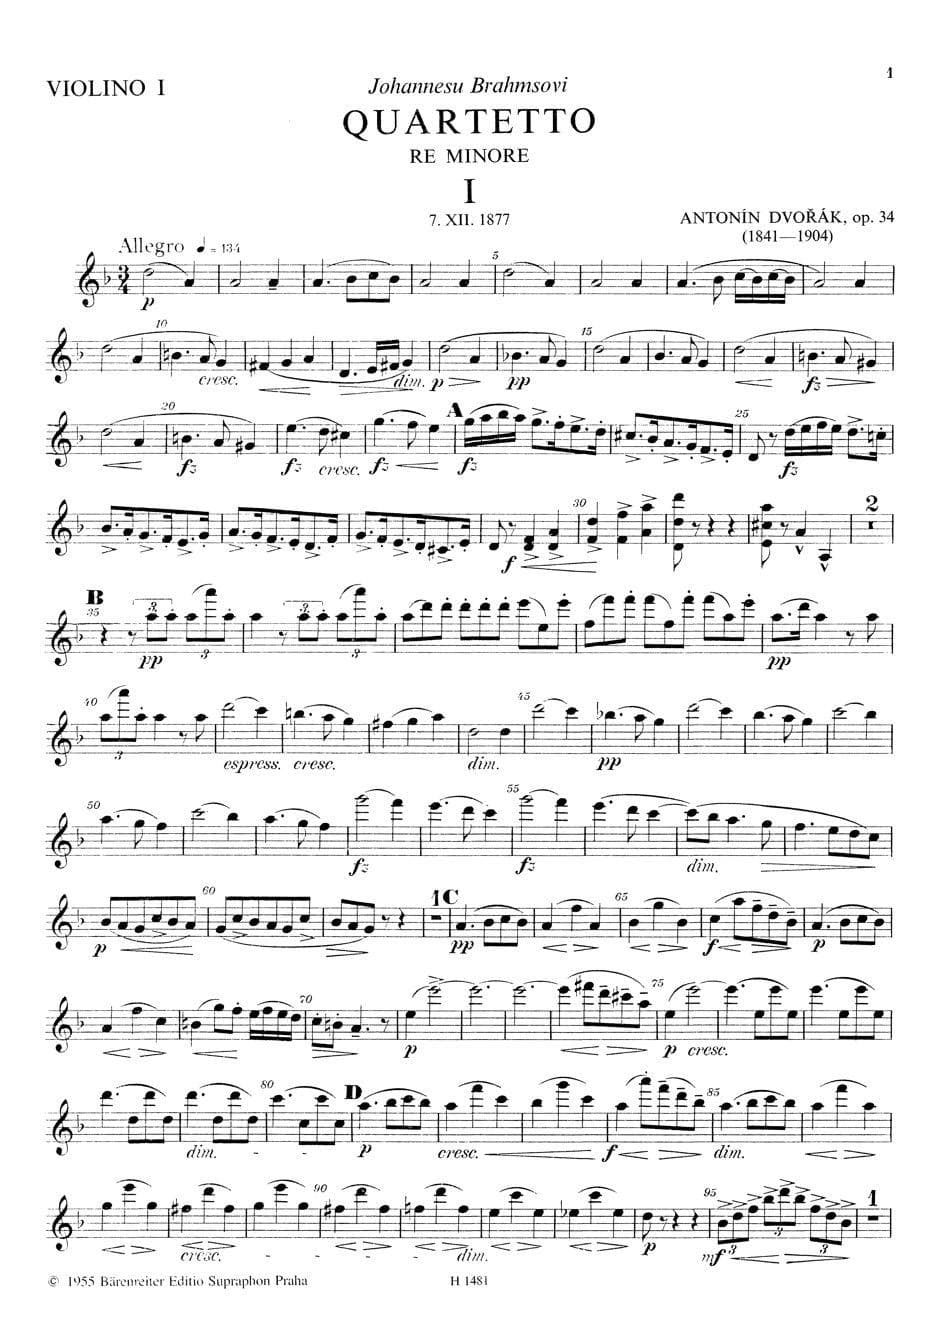 Dvorák, Antonín - Quartet No 9 in d minor, Op 34 - Two Violins, Viola, and Cello - Bärenreiter Verlag URTEXT